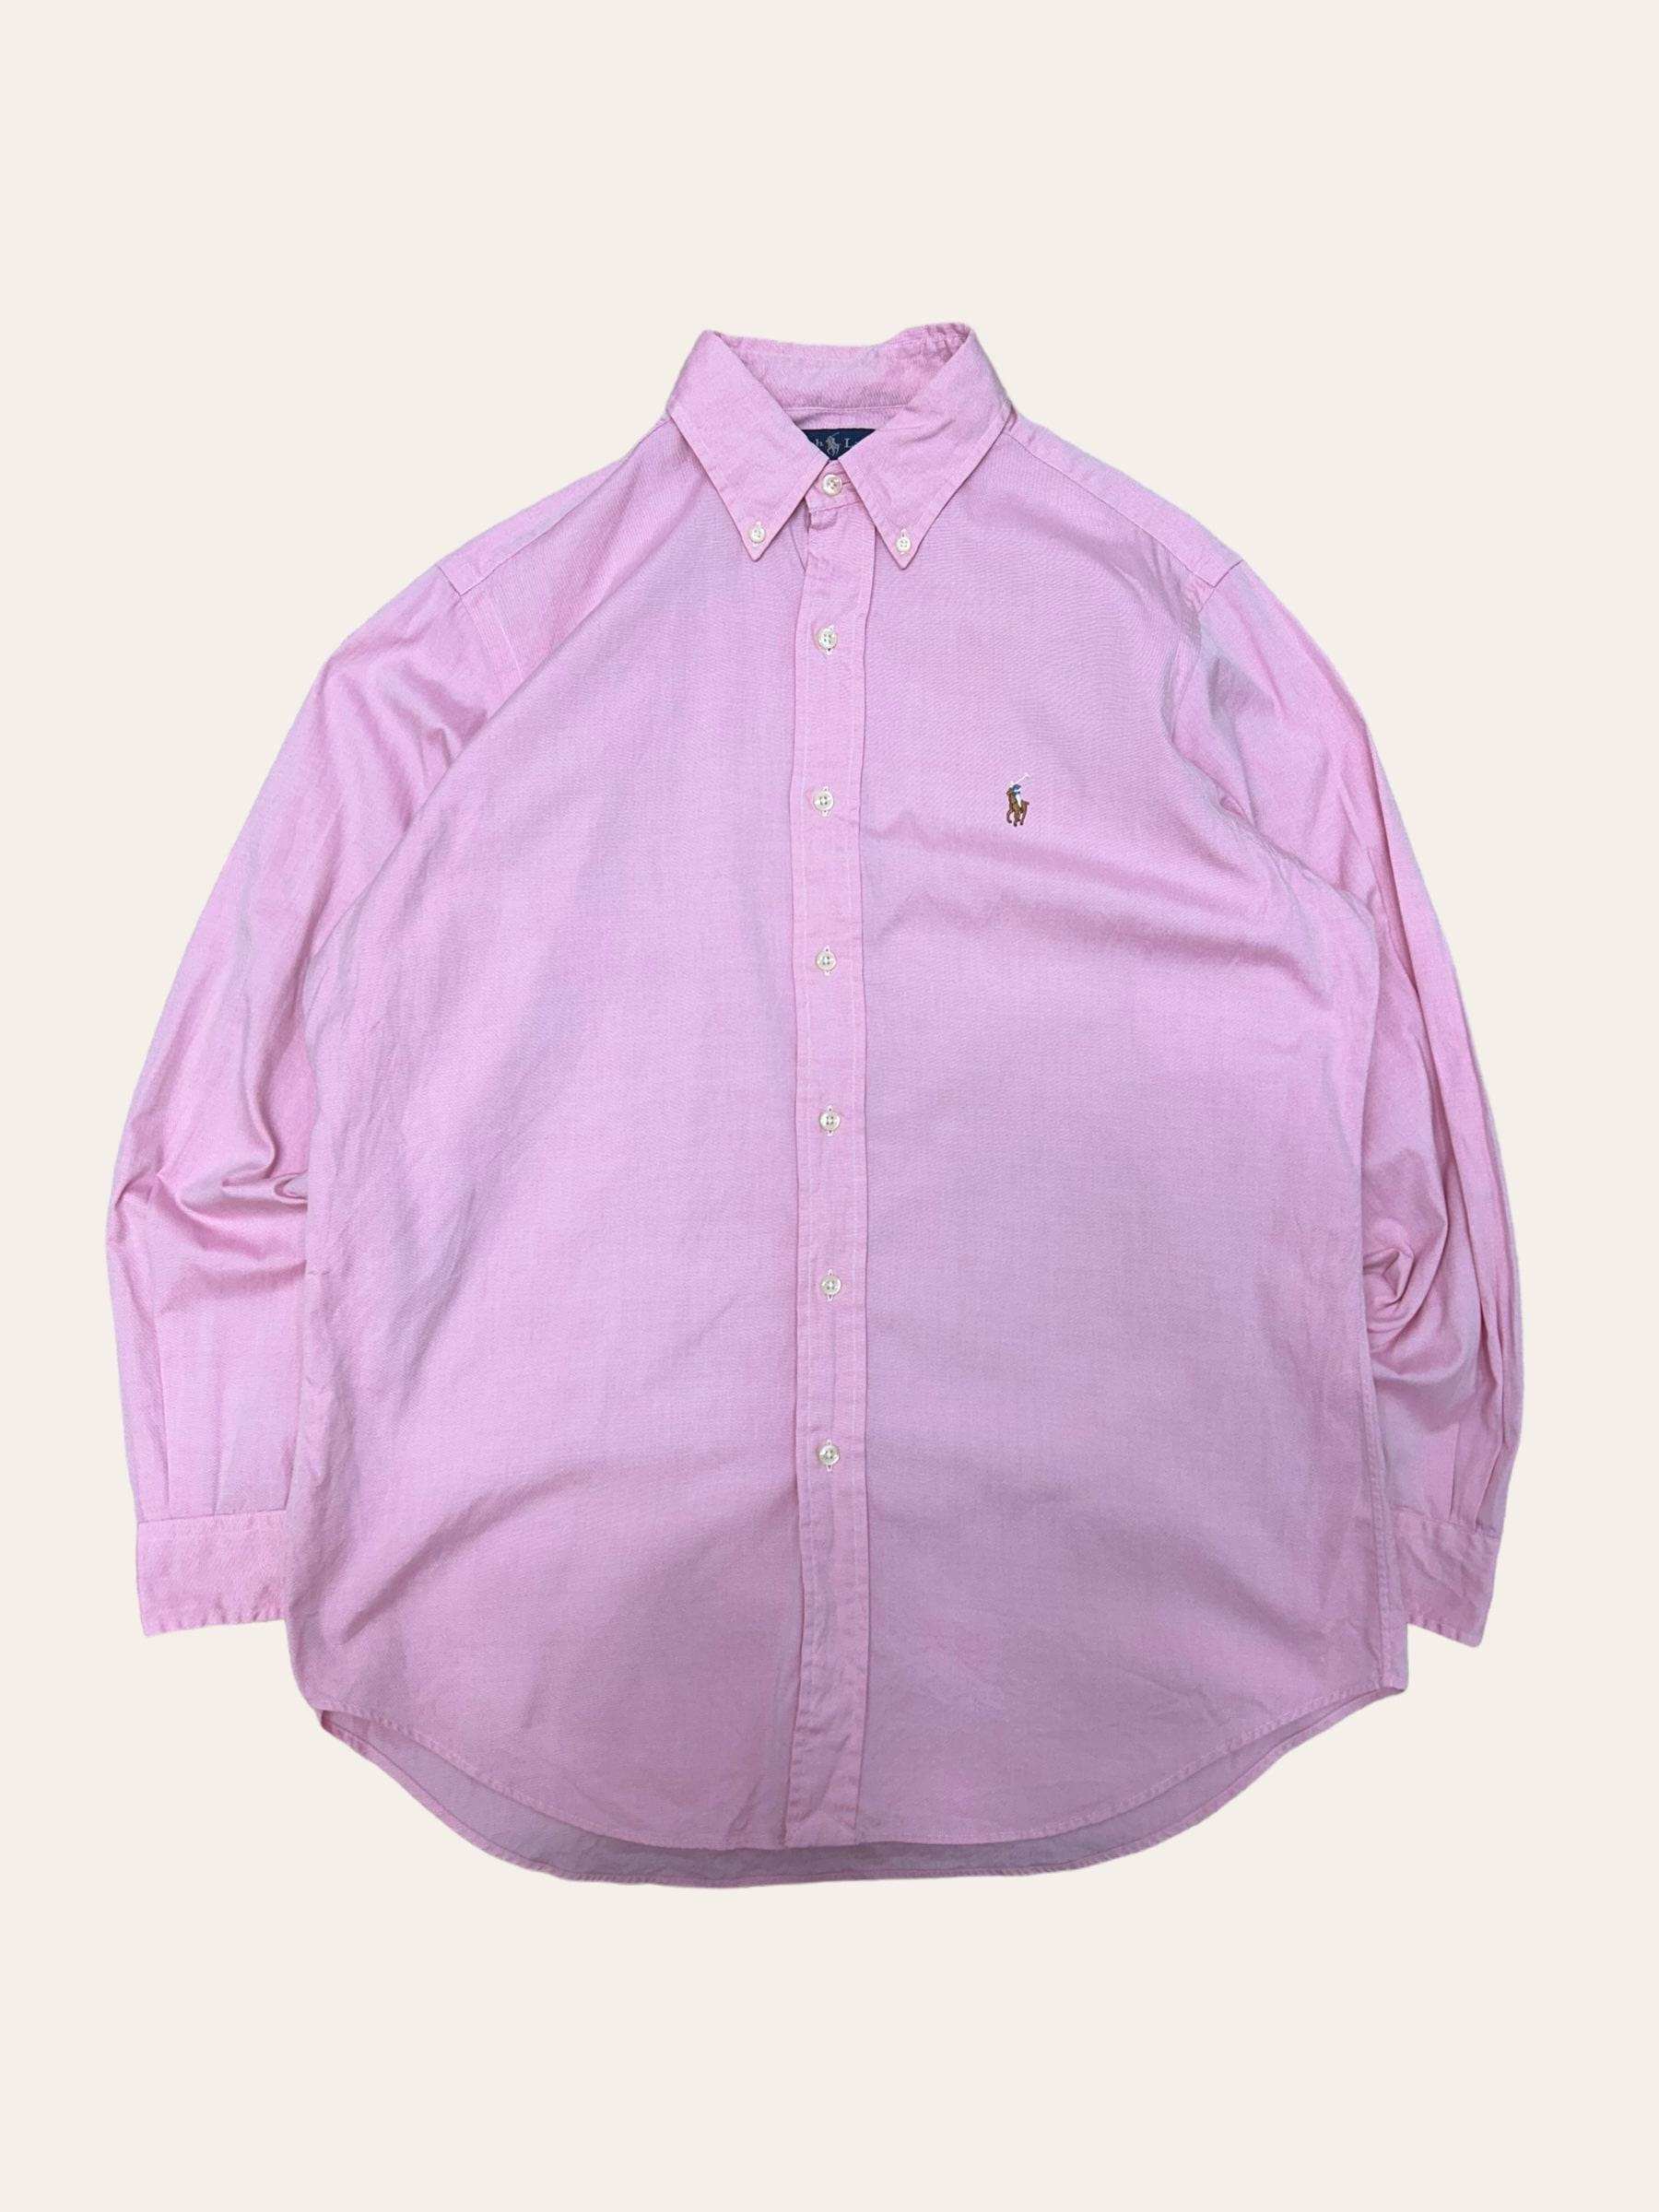 (From USA)Polo ralph lauren pink color poplin shirt 15.5